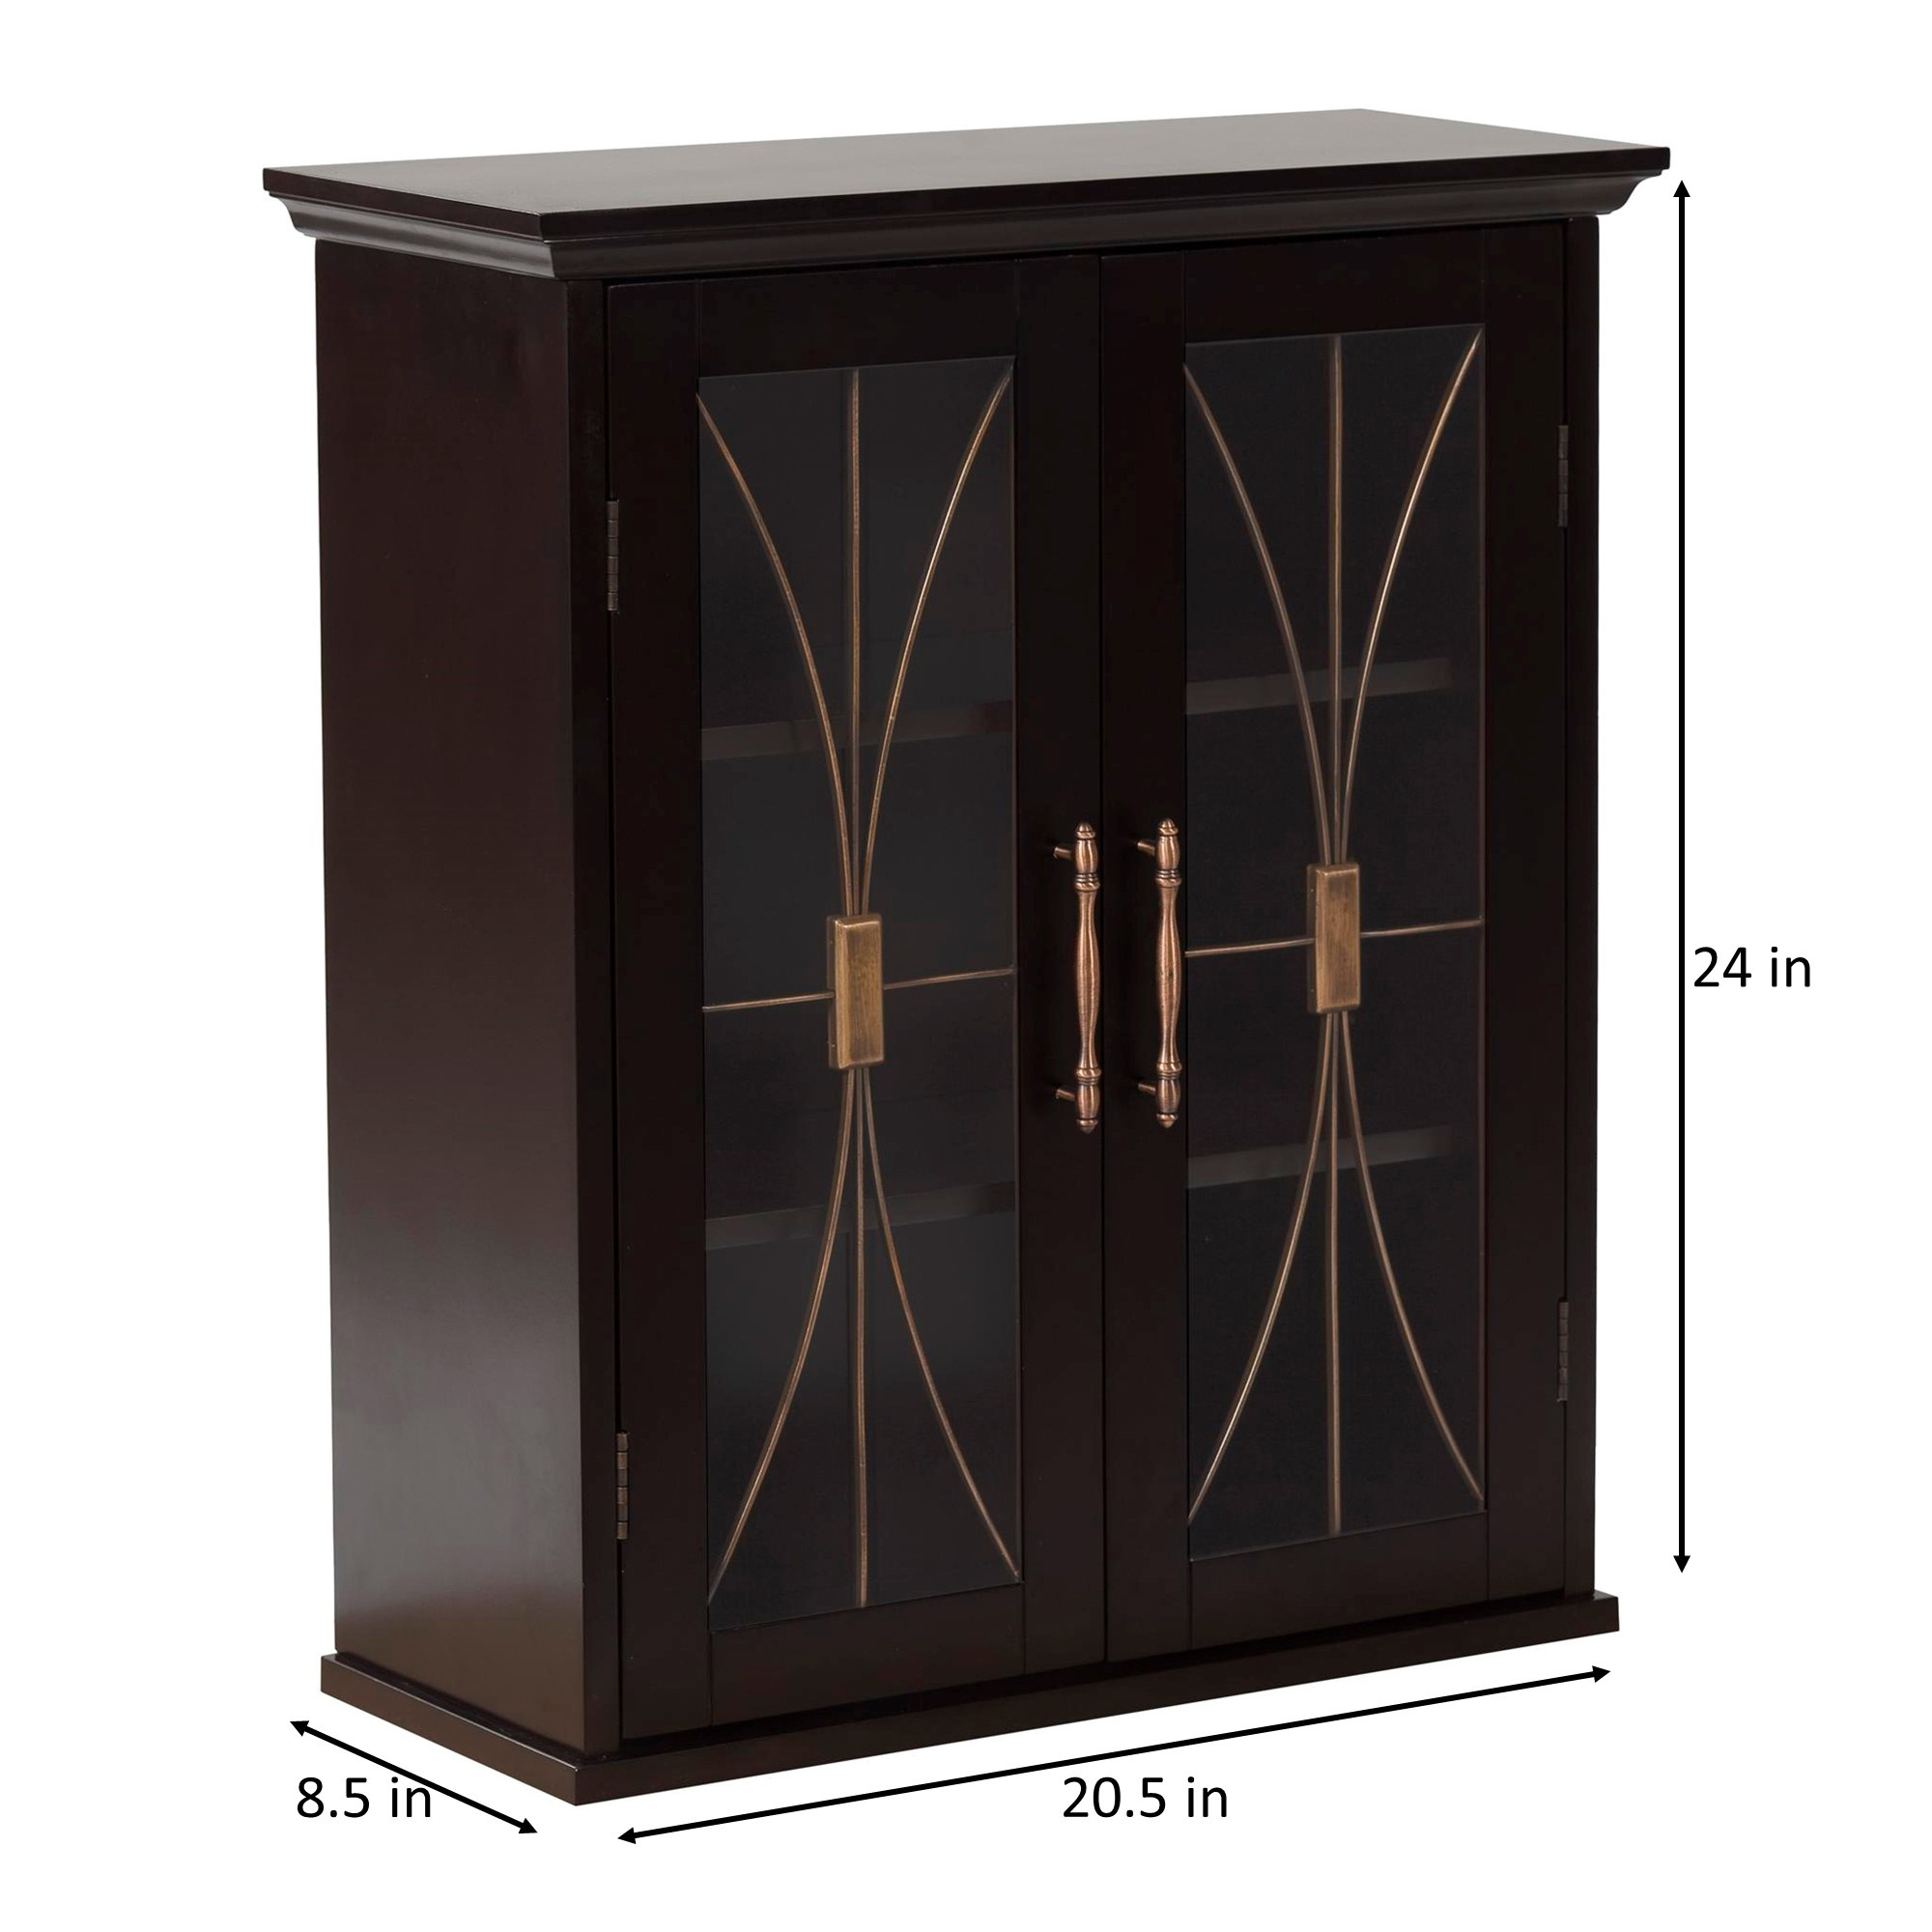 Elegant Home Fashions Alma Wall Cabinet, Espresso - image 3 of 3